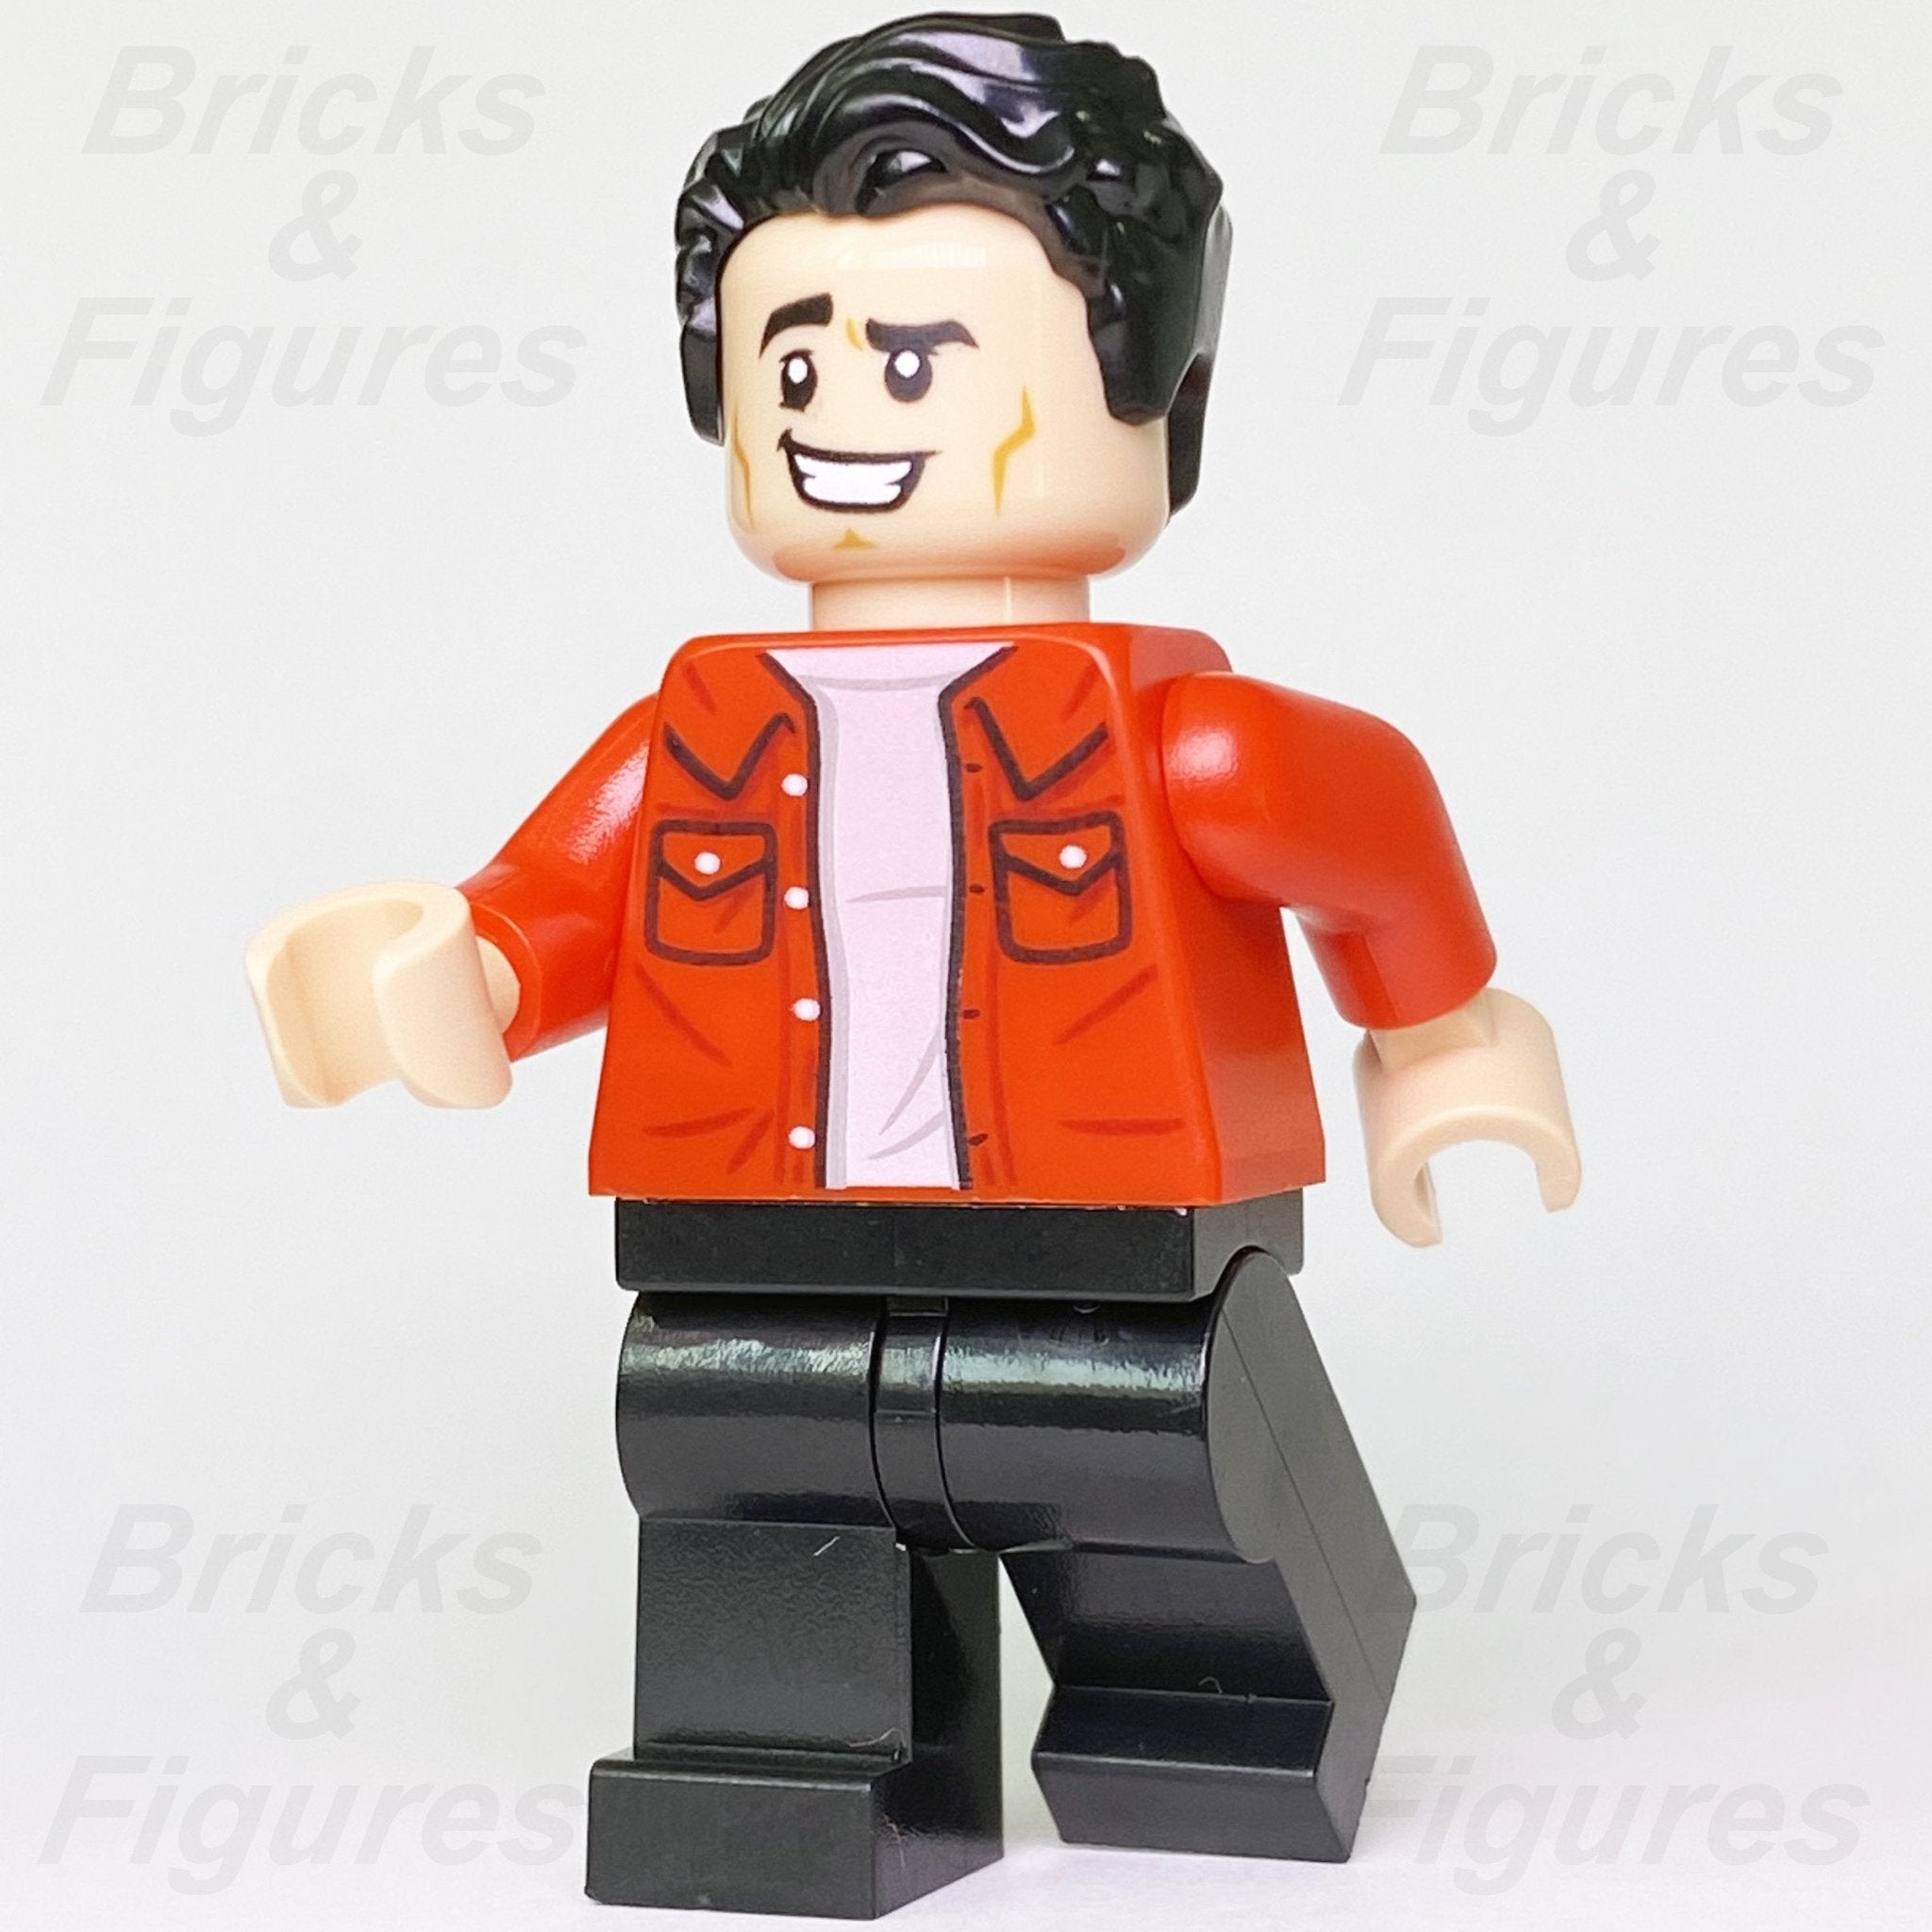 LEGO Ideas minifigures